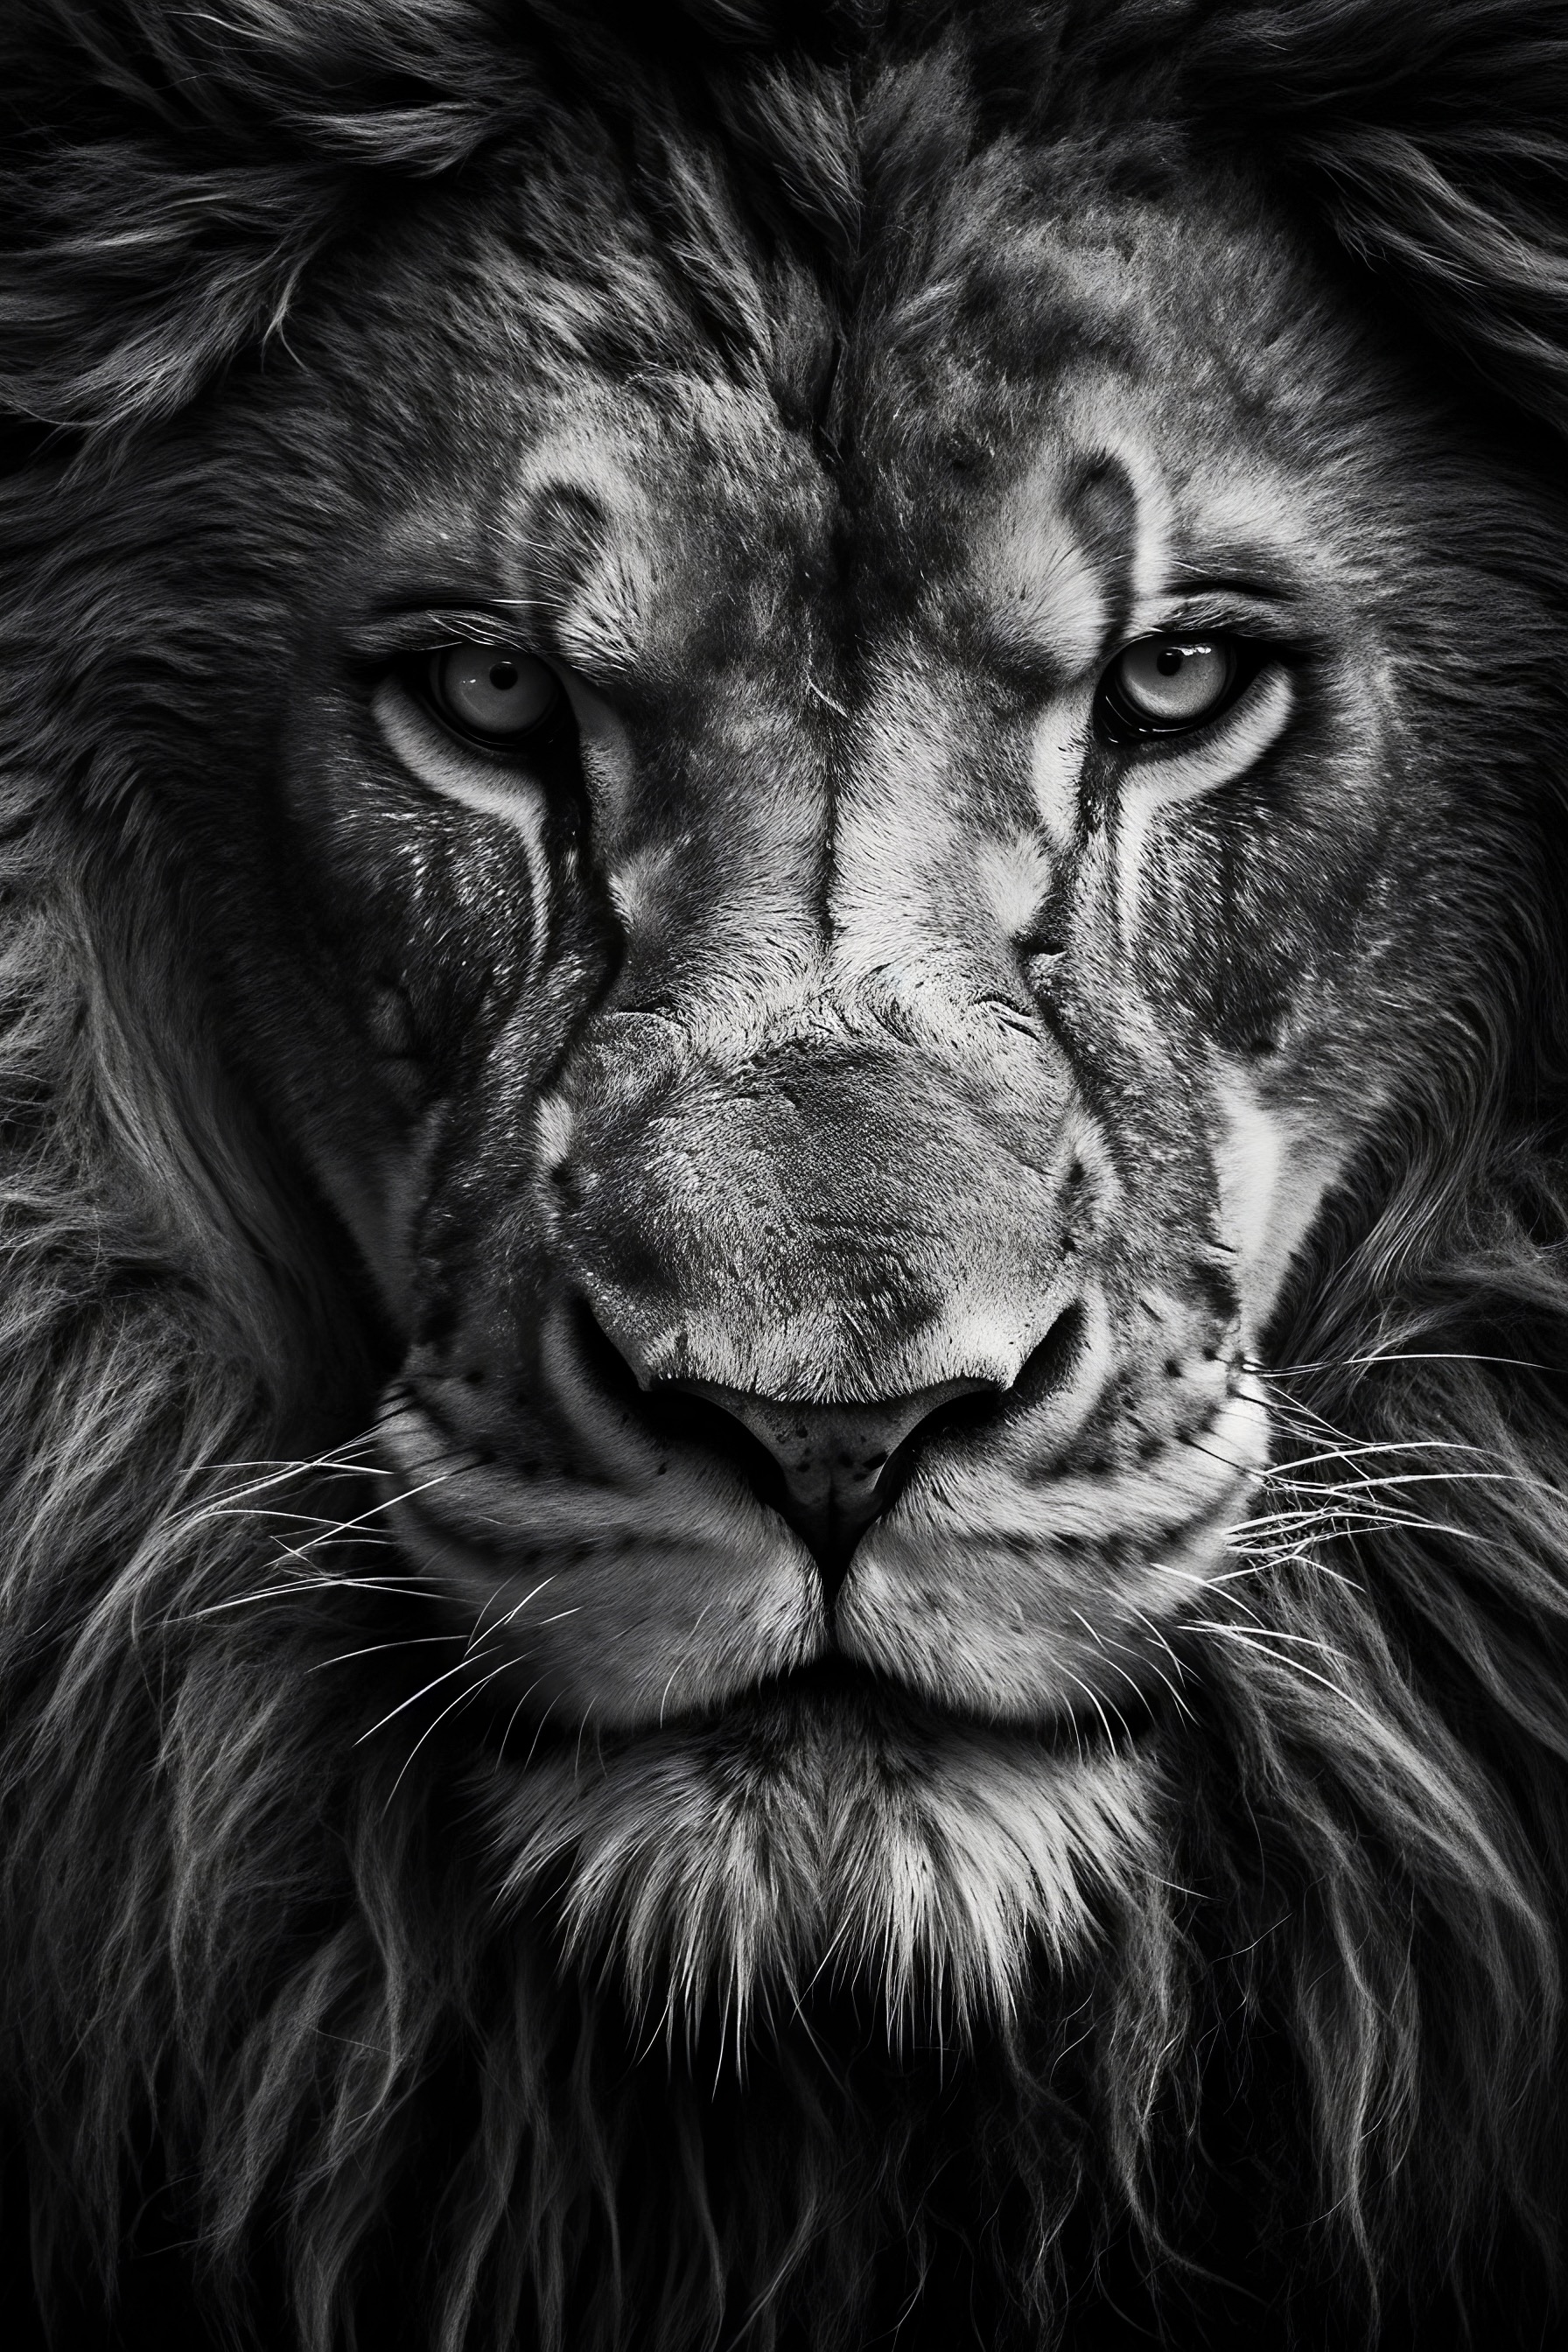 Lion Stare Serious Portrait Dark Black and White Free Stock Photo ...